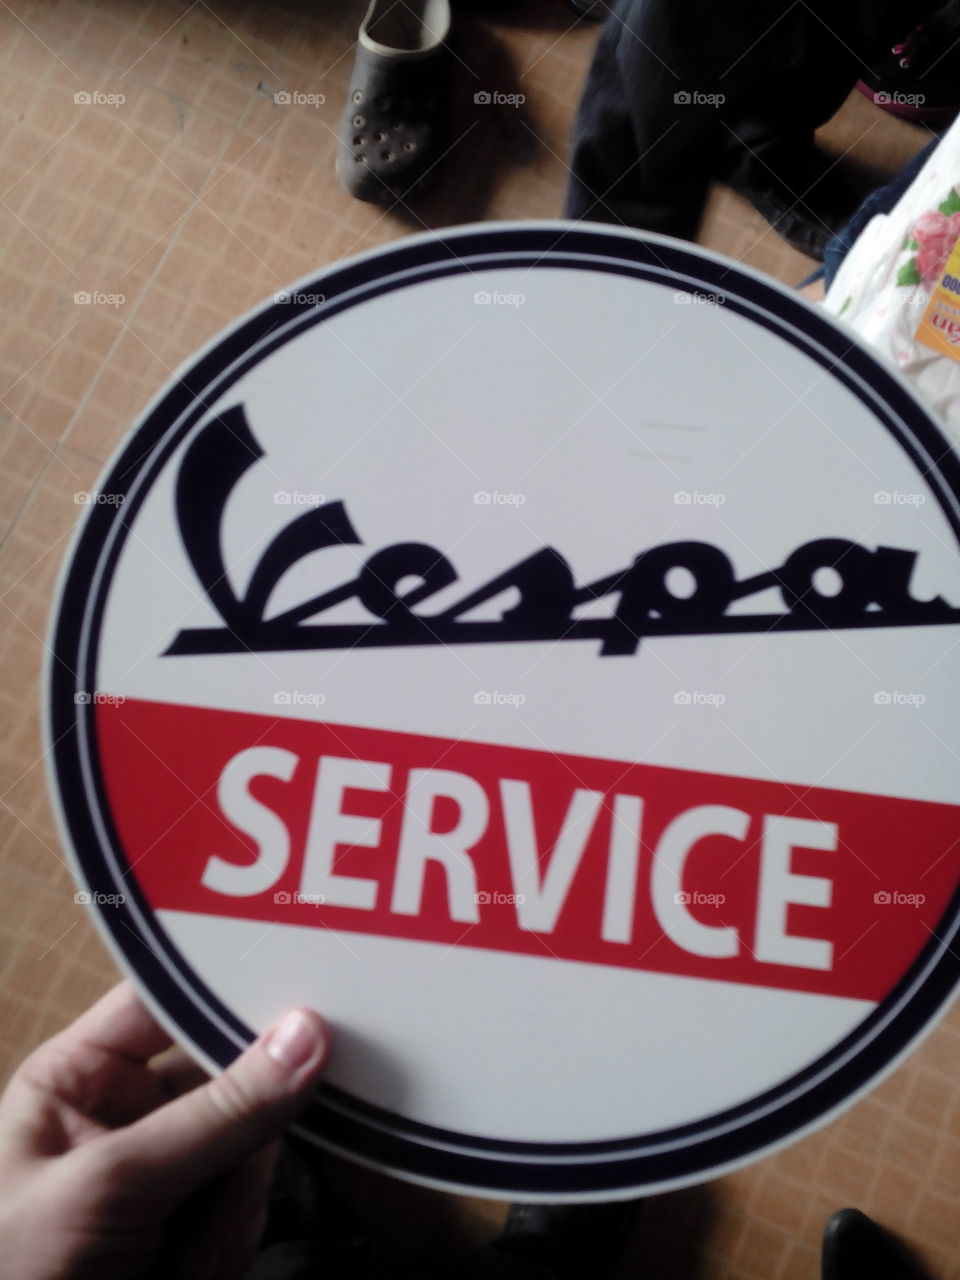 Vespa service. signage